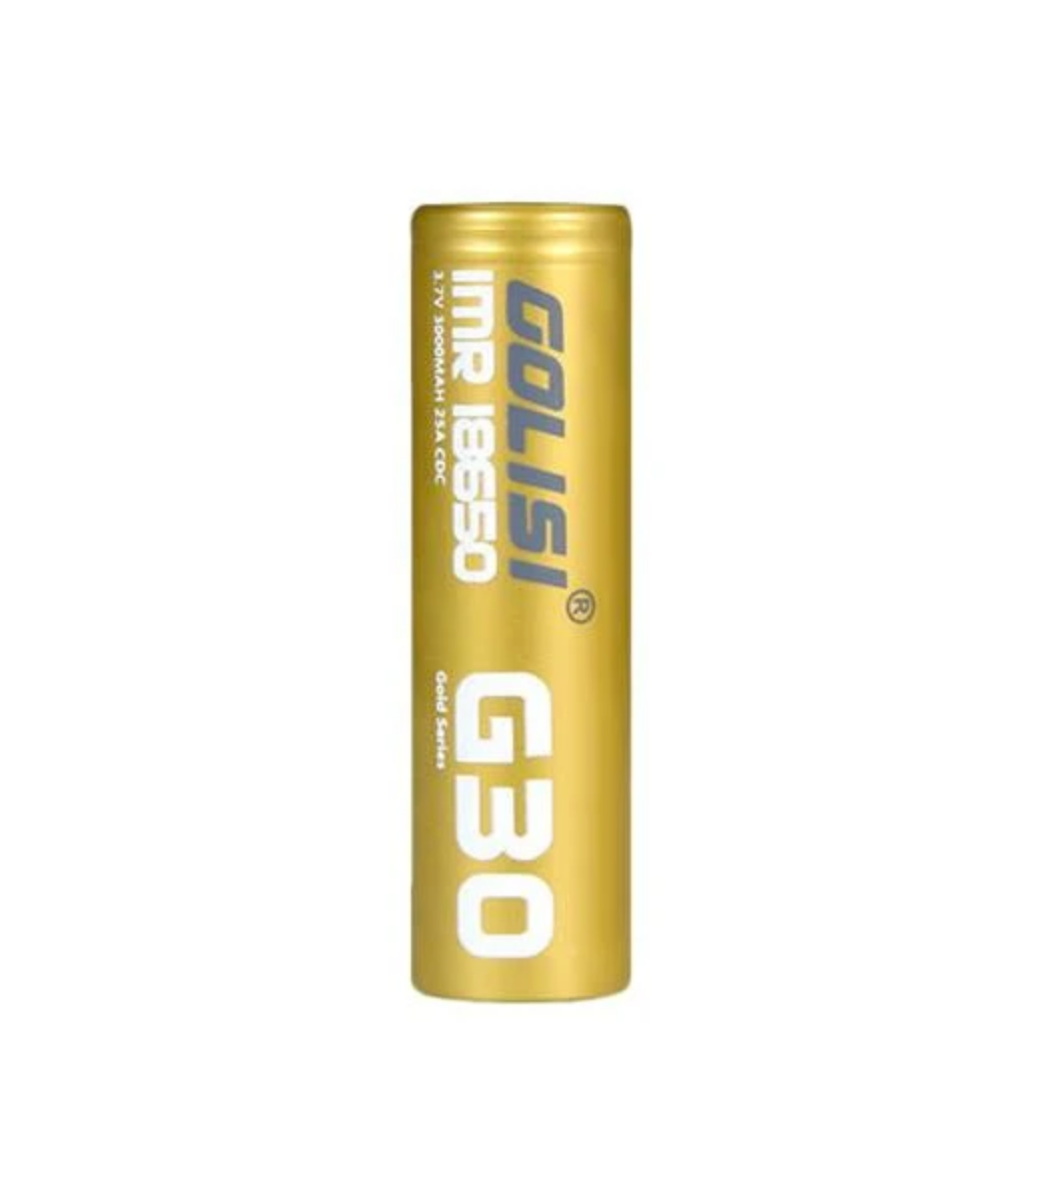 Golisi - G30 3000mah - Single Battery - My Vape Store